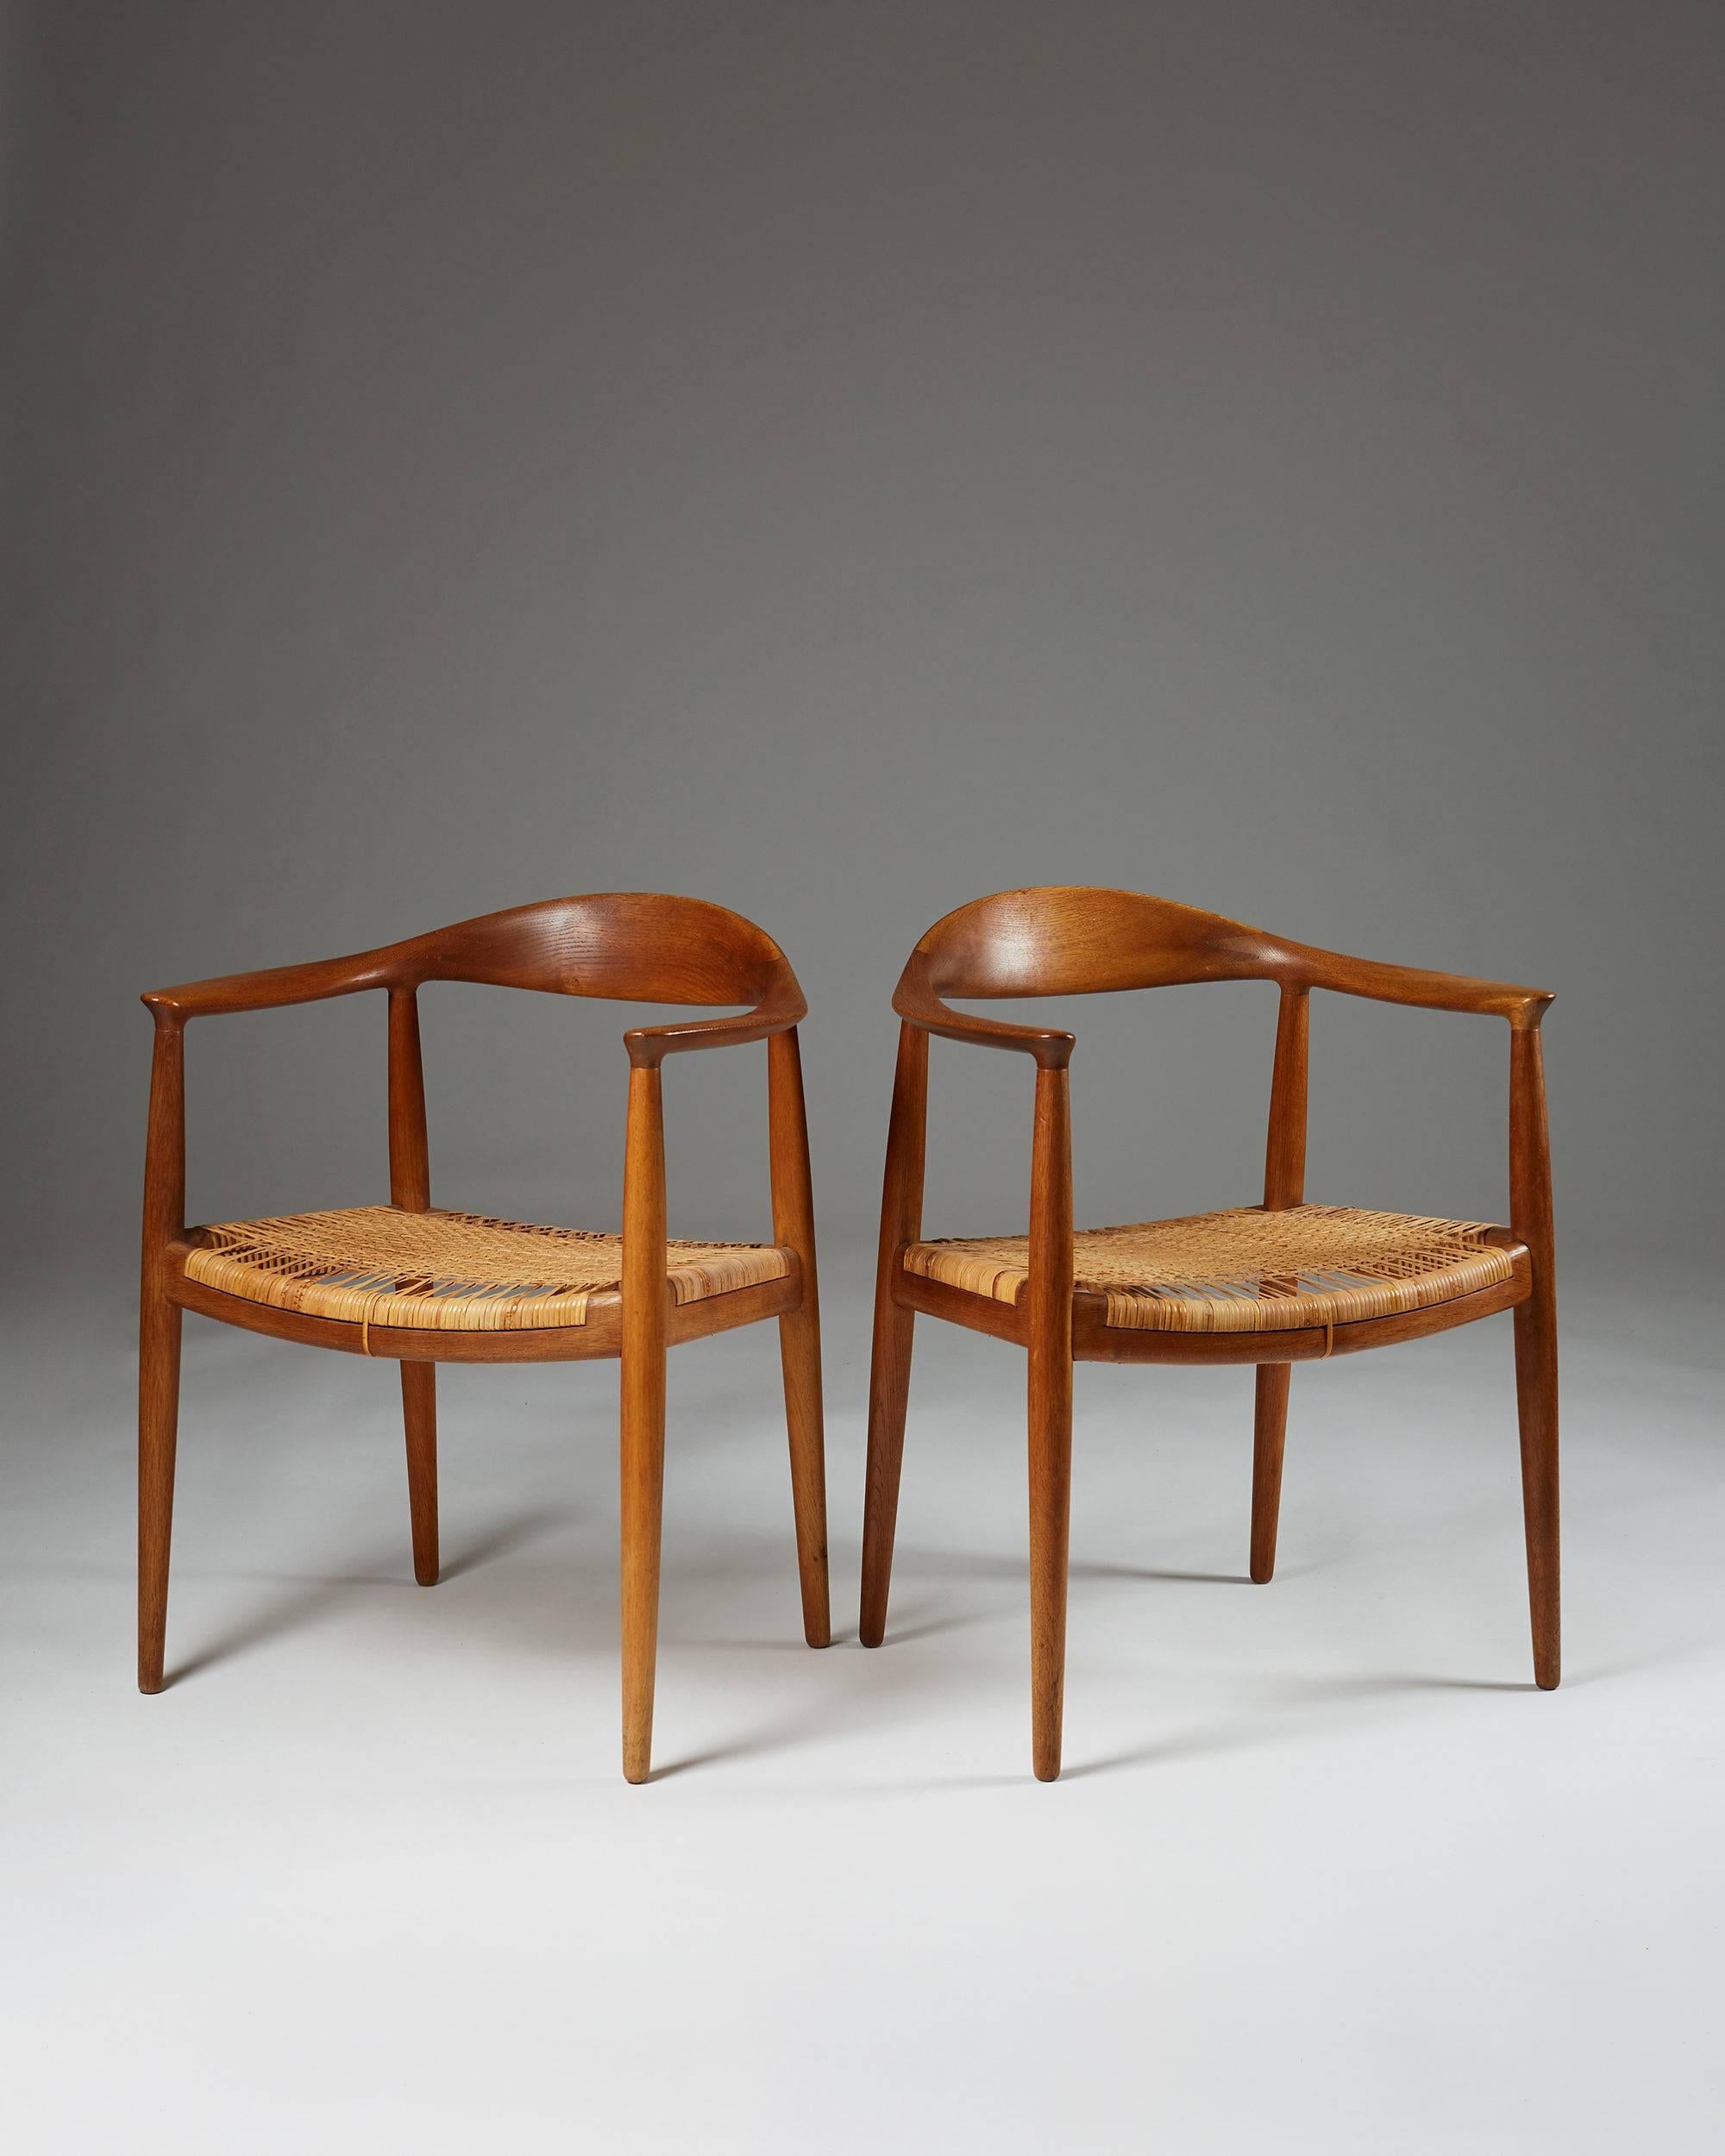 Pair of armchairs “The Chair” designed by Hans J. Wegner for Johannes Hansen, Denmark. 1949. Teak and cane.

Measures: H: 76 cm/ 30